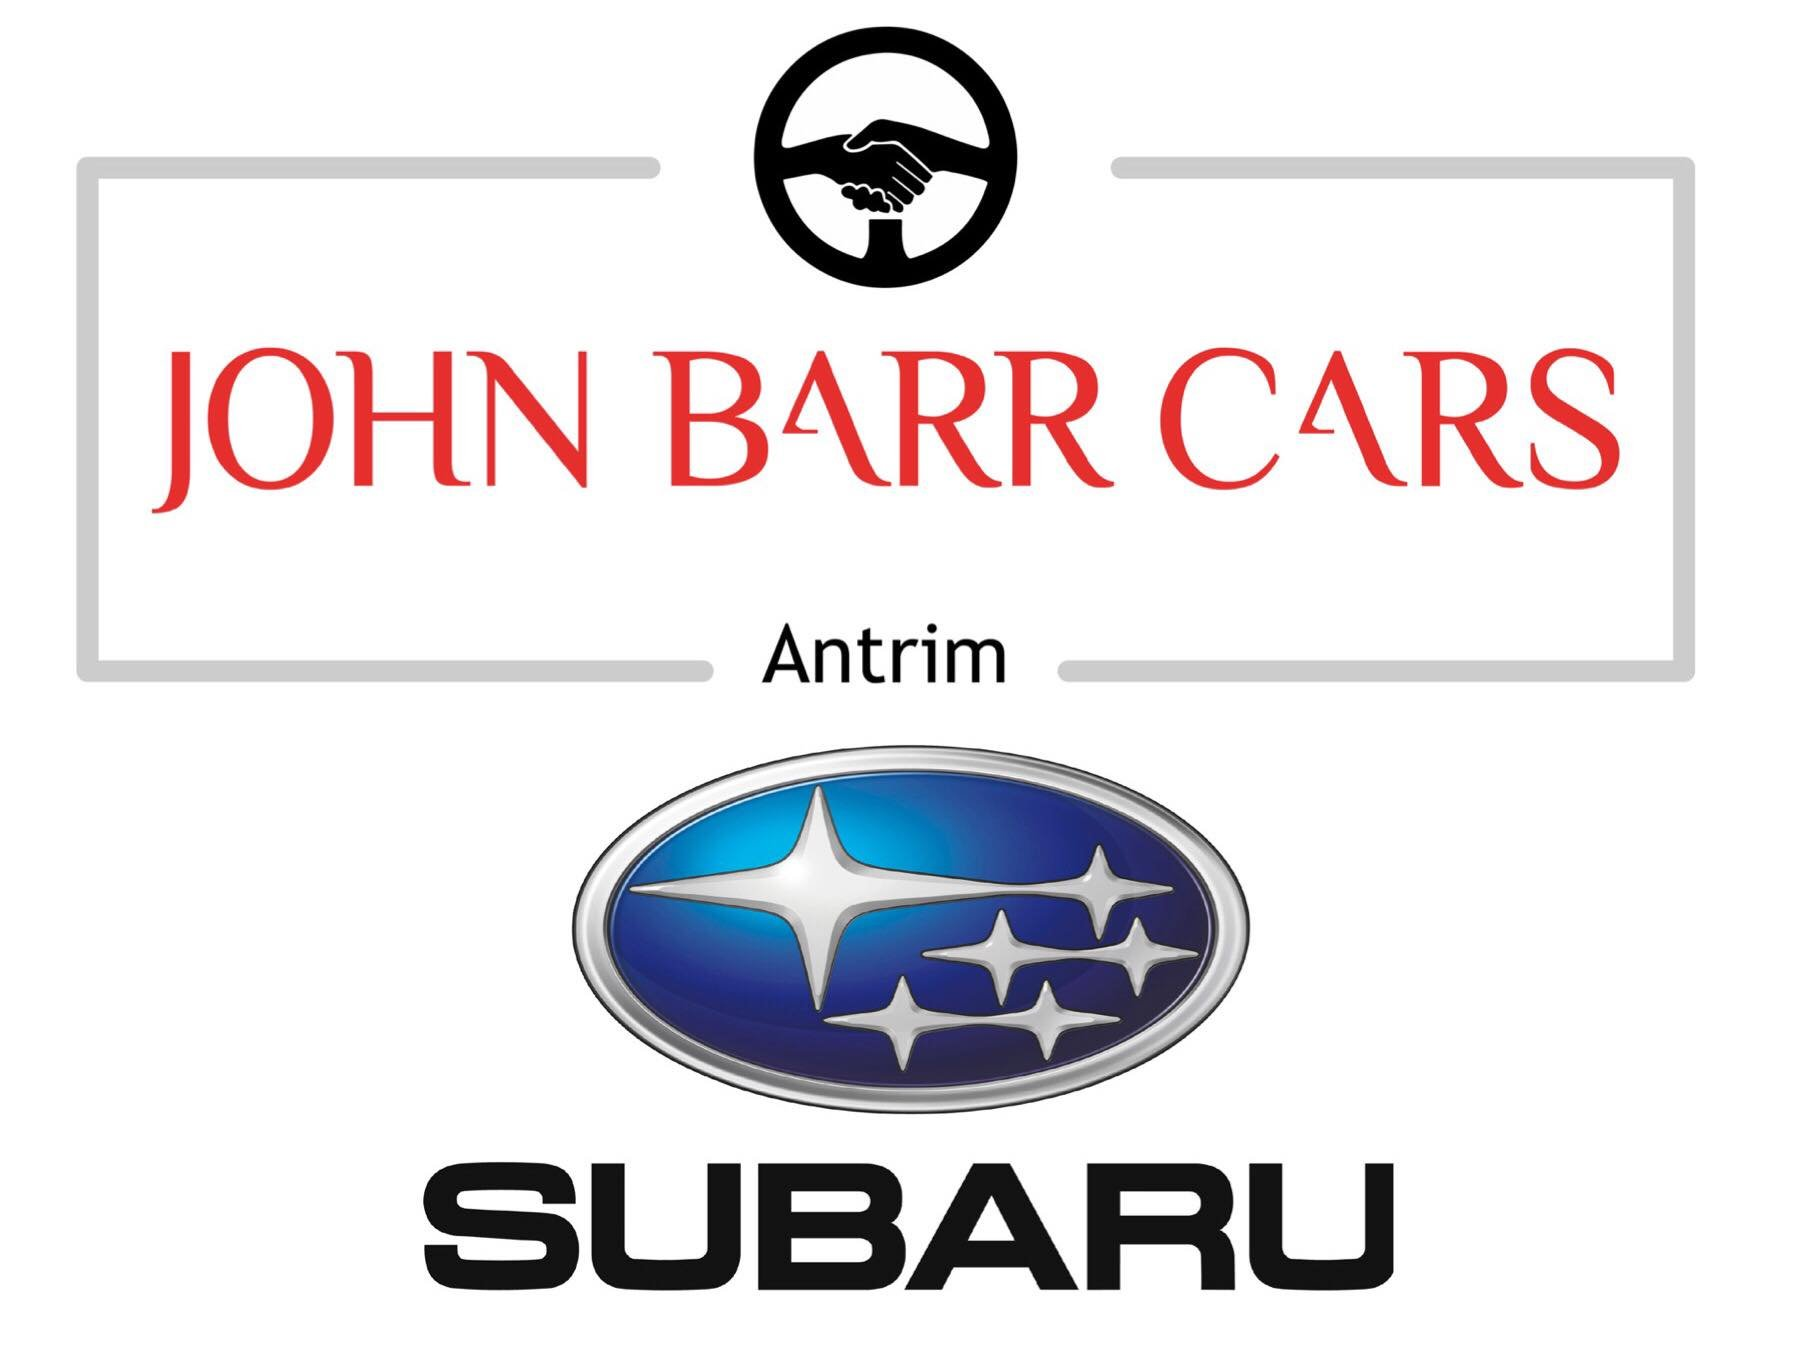 John Barr Cars Ltd Antrim CampingNI sponsor